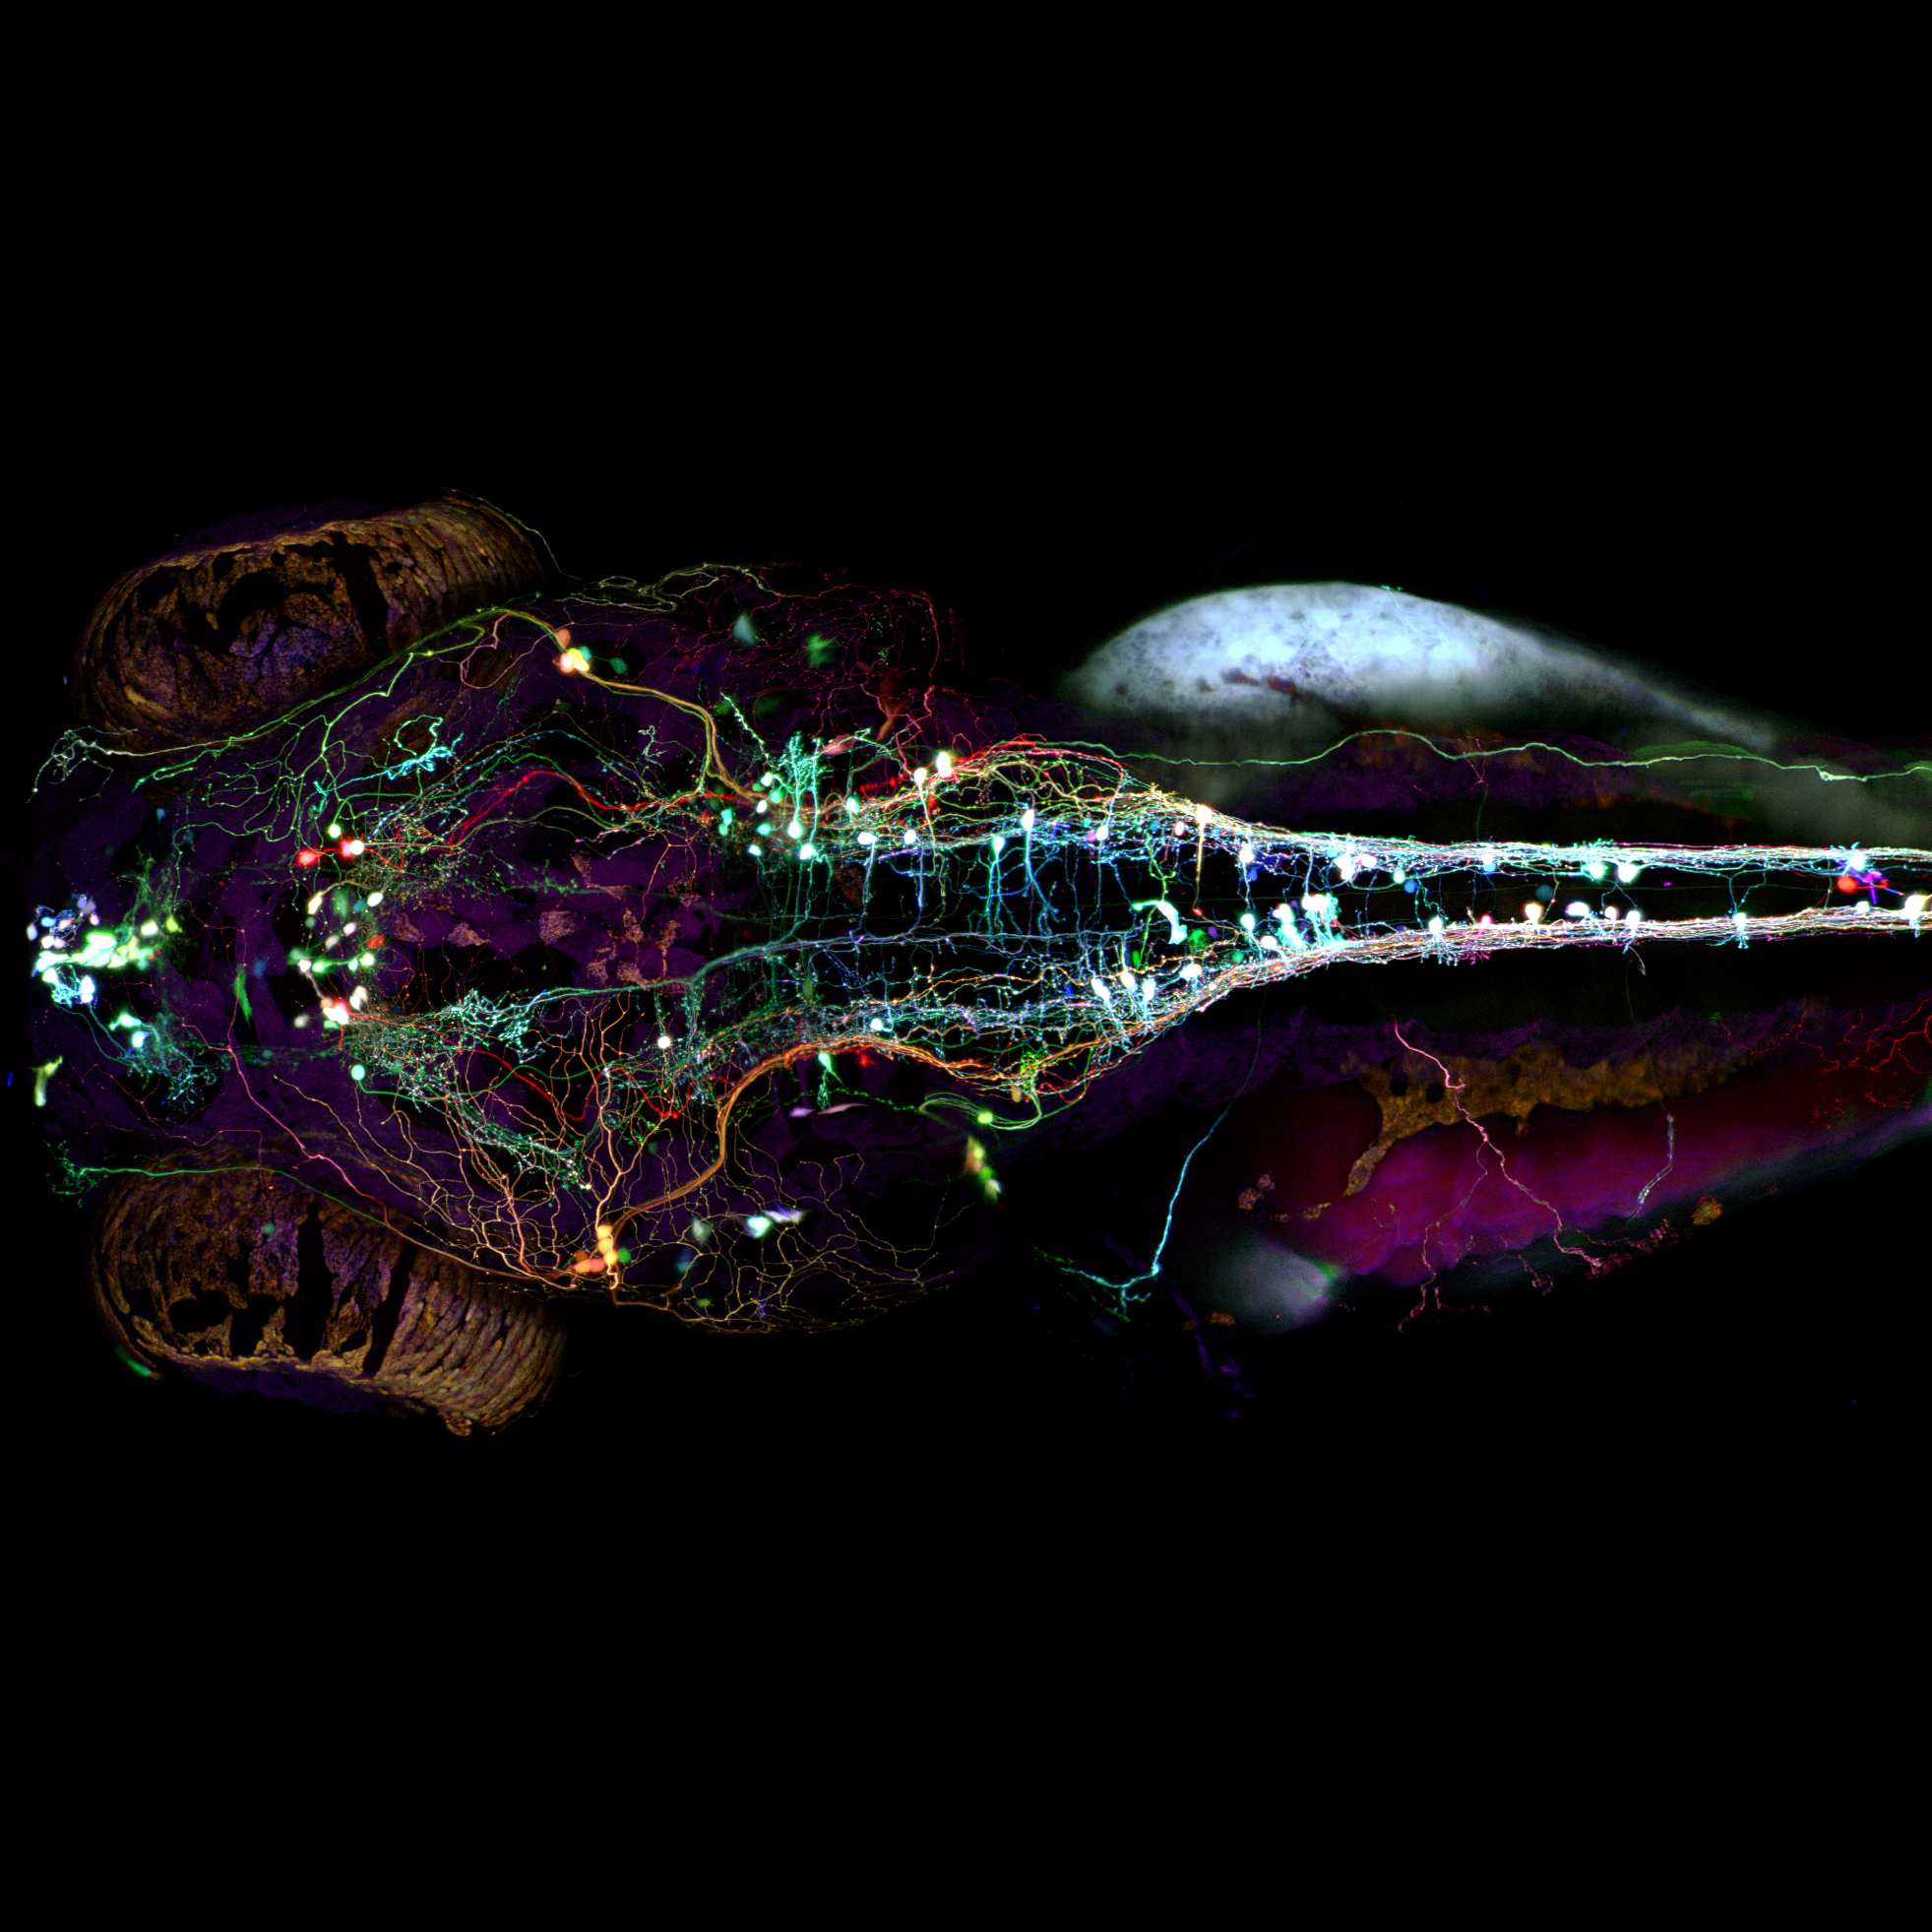 Zebra fish brain fluorescence image